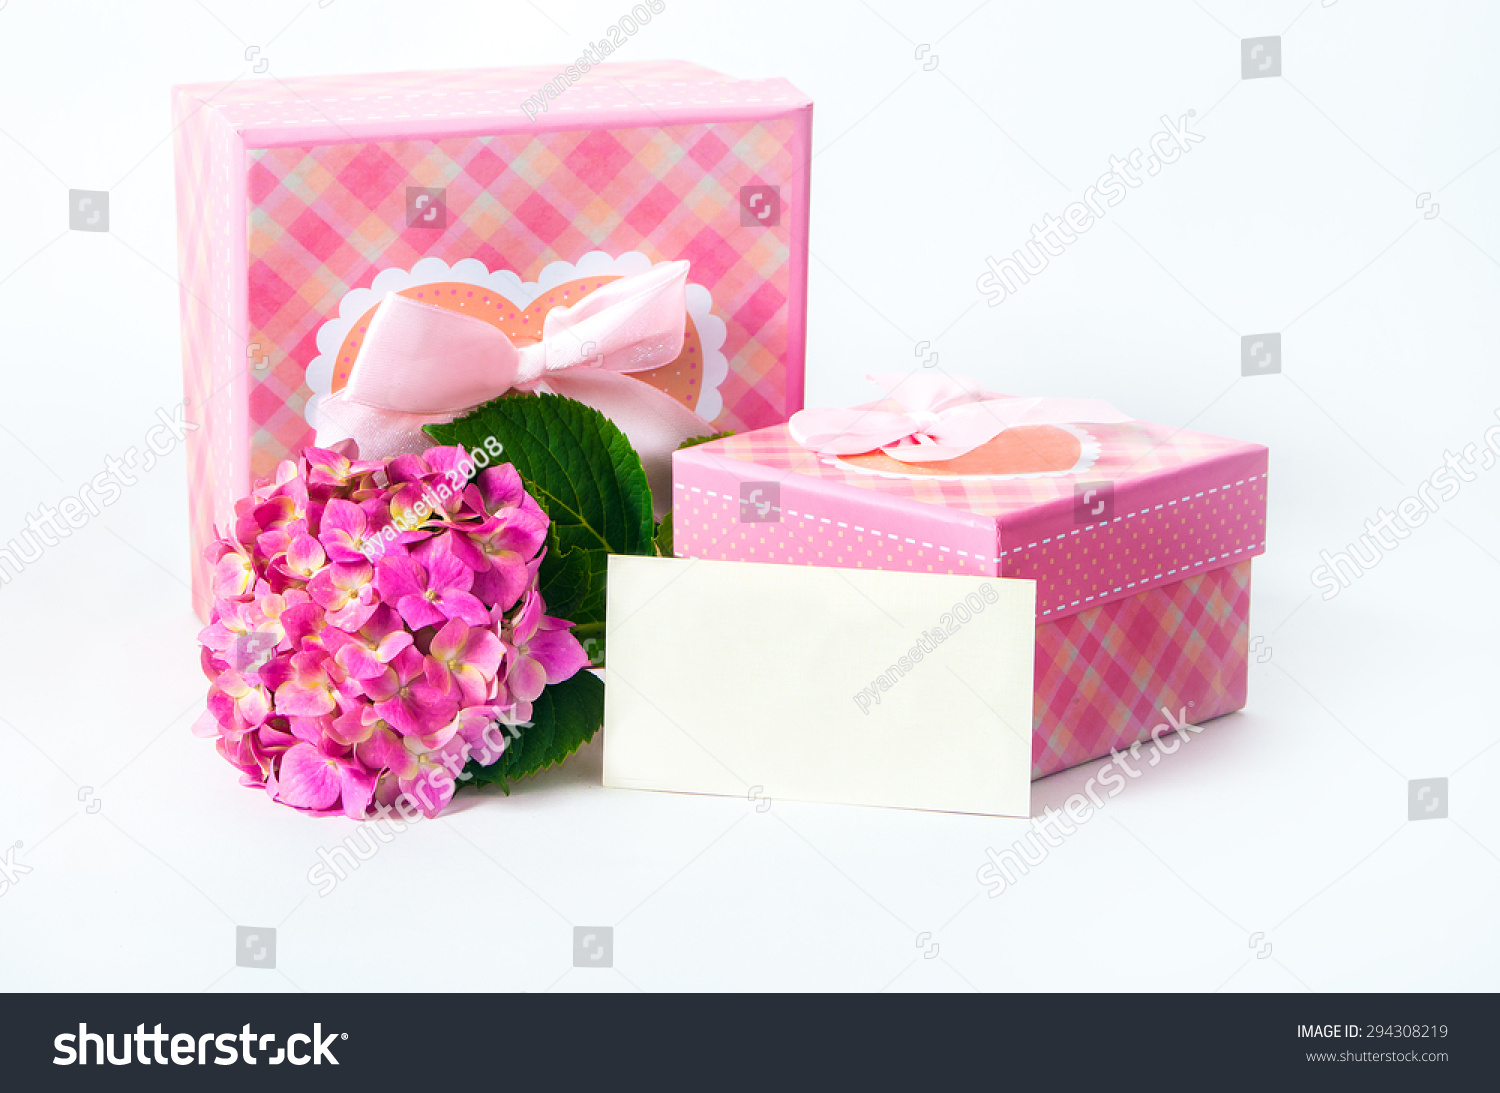 Card Hydrangea Flower Gift Box Present Nature Stock Image 294308219